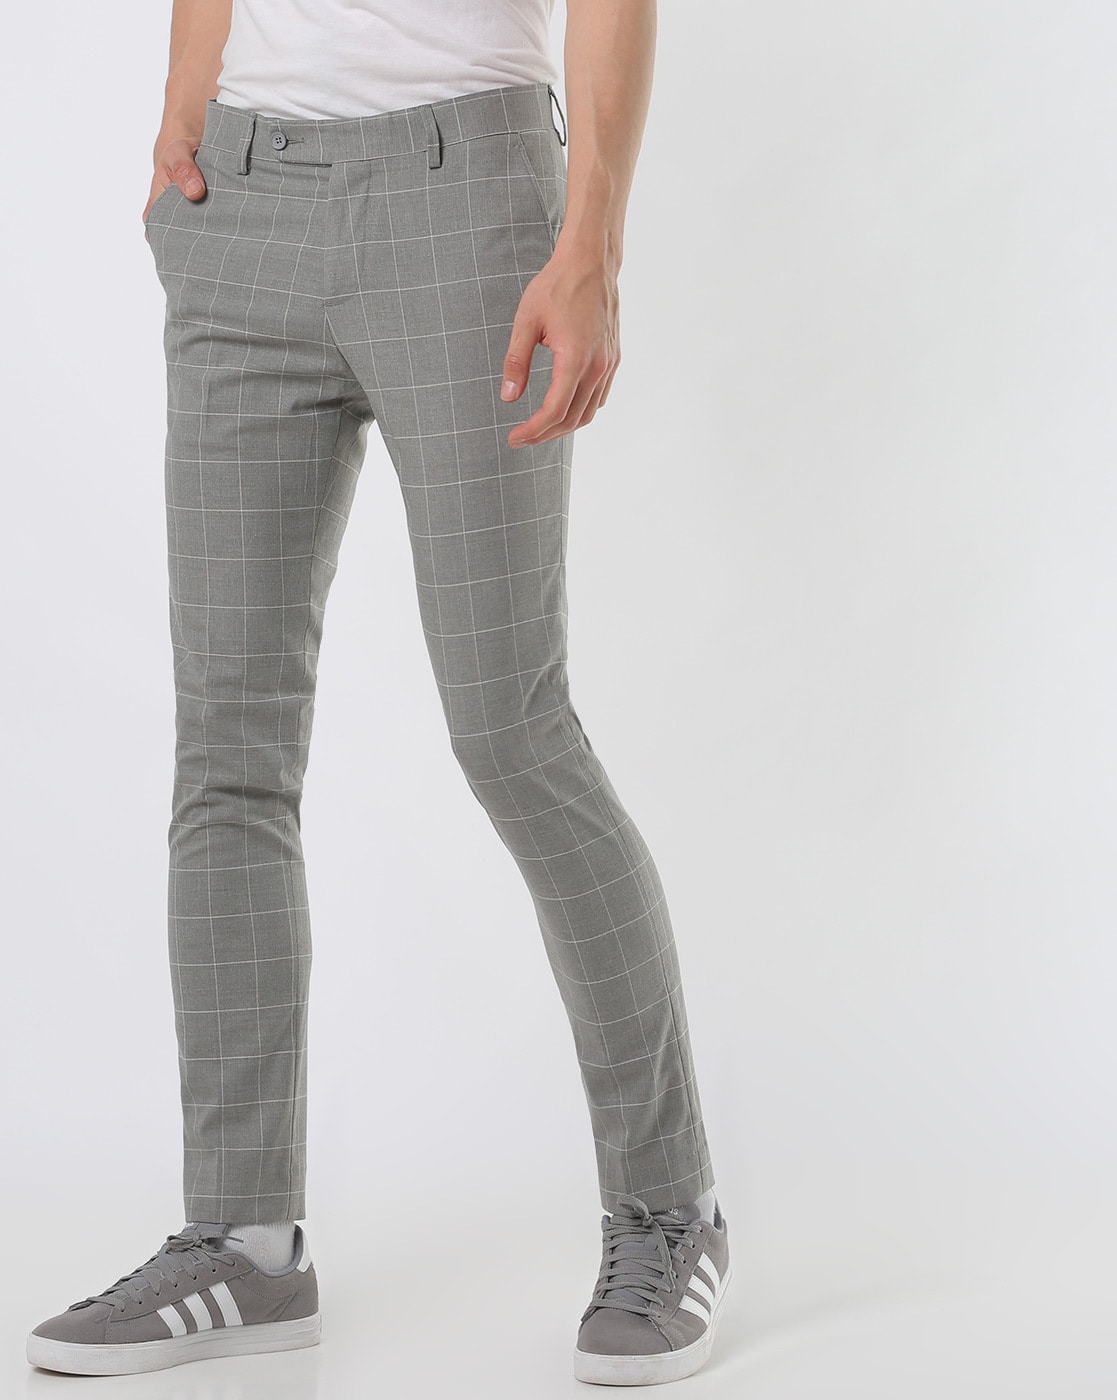 Men's Trouser & Chinos. Buy Trousers For Men Online… | by Varnit Sharma |  Medium